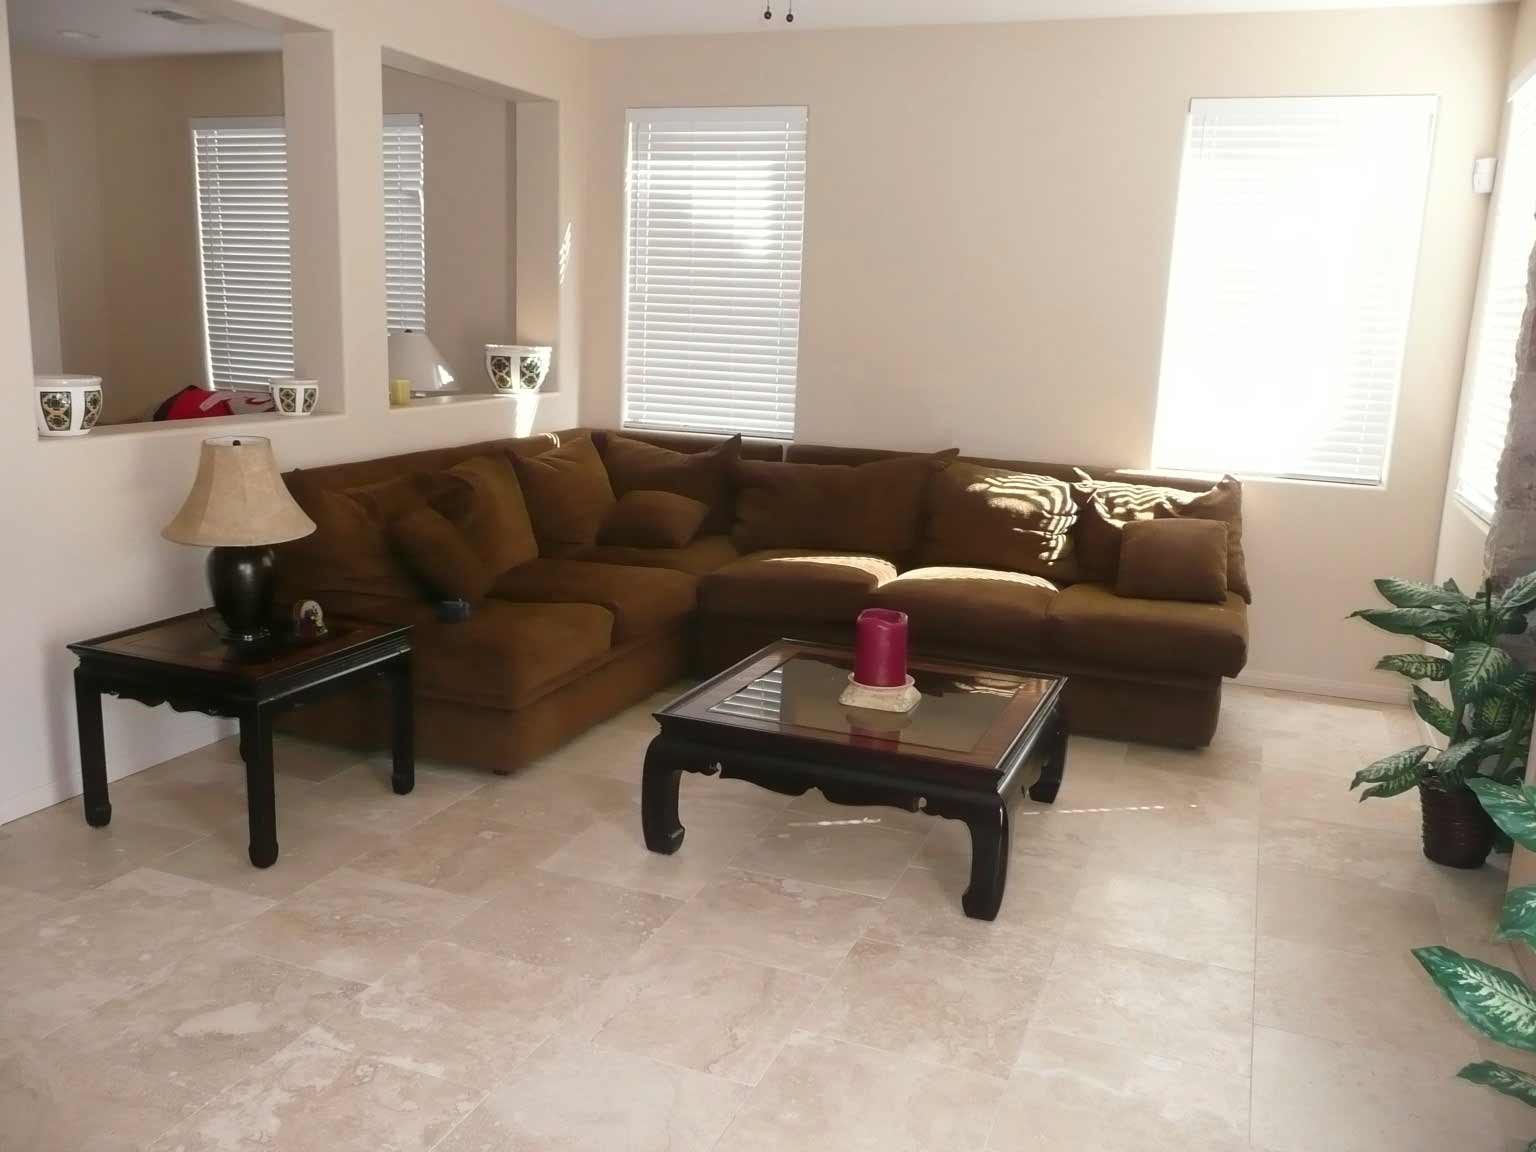 Affordable home furniture